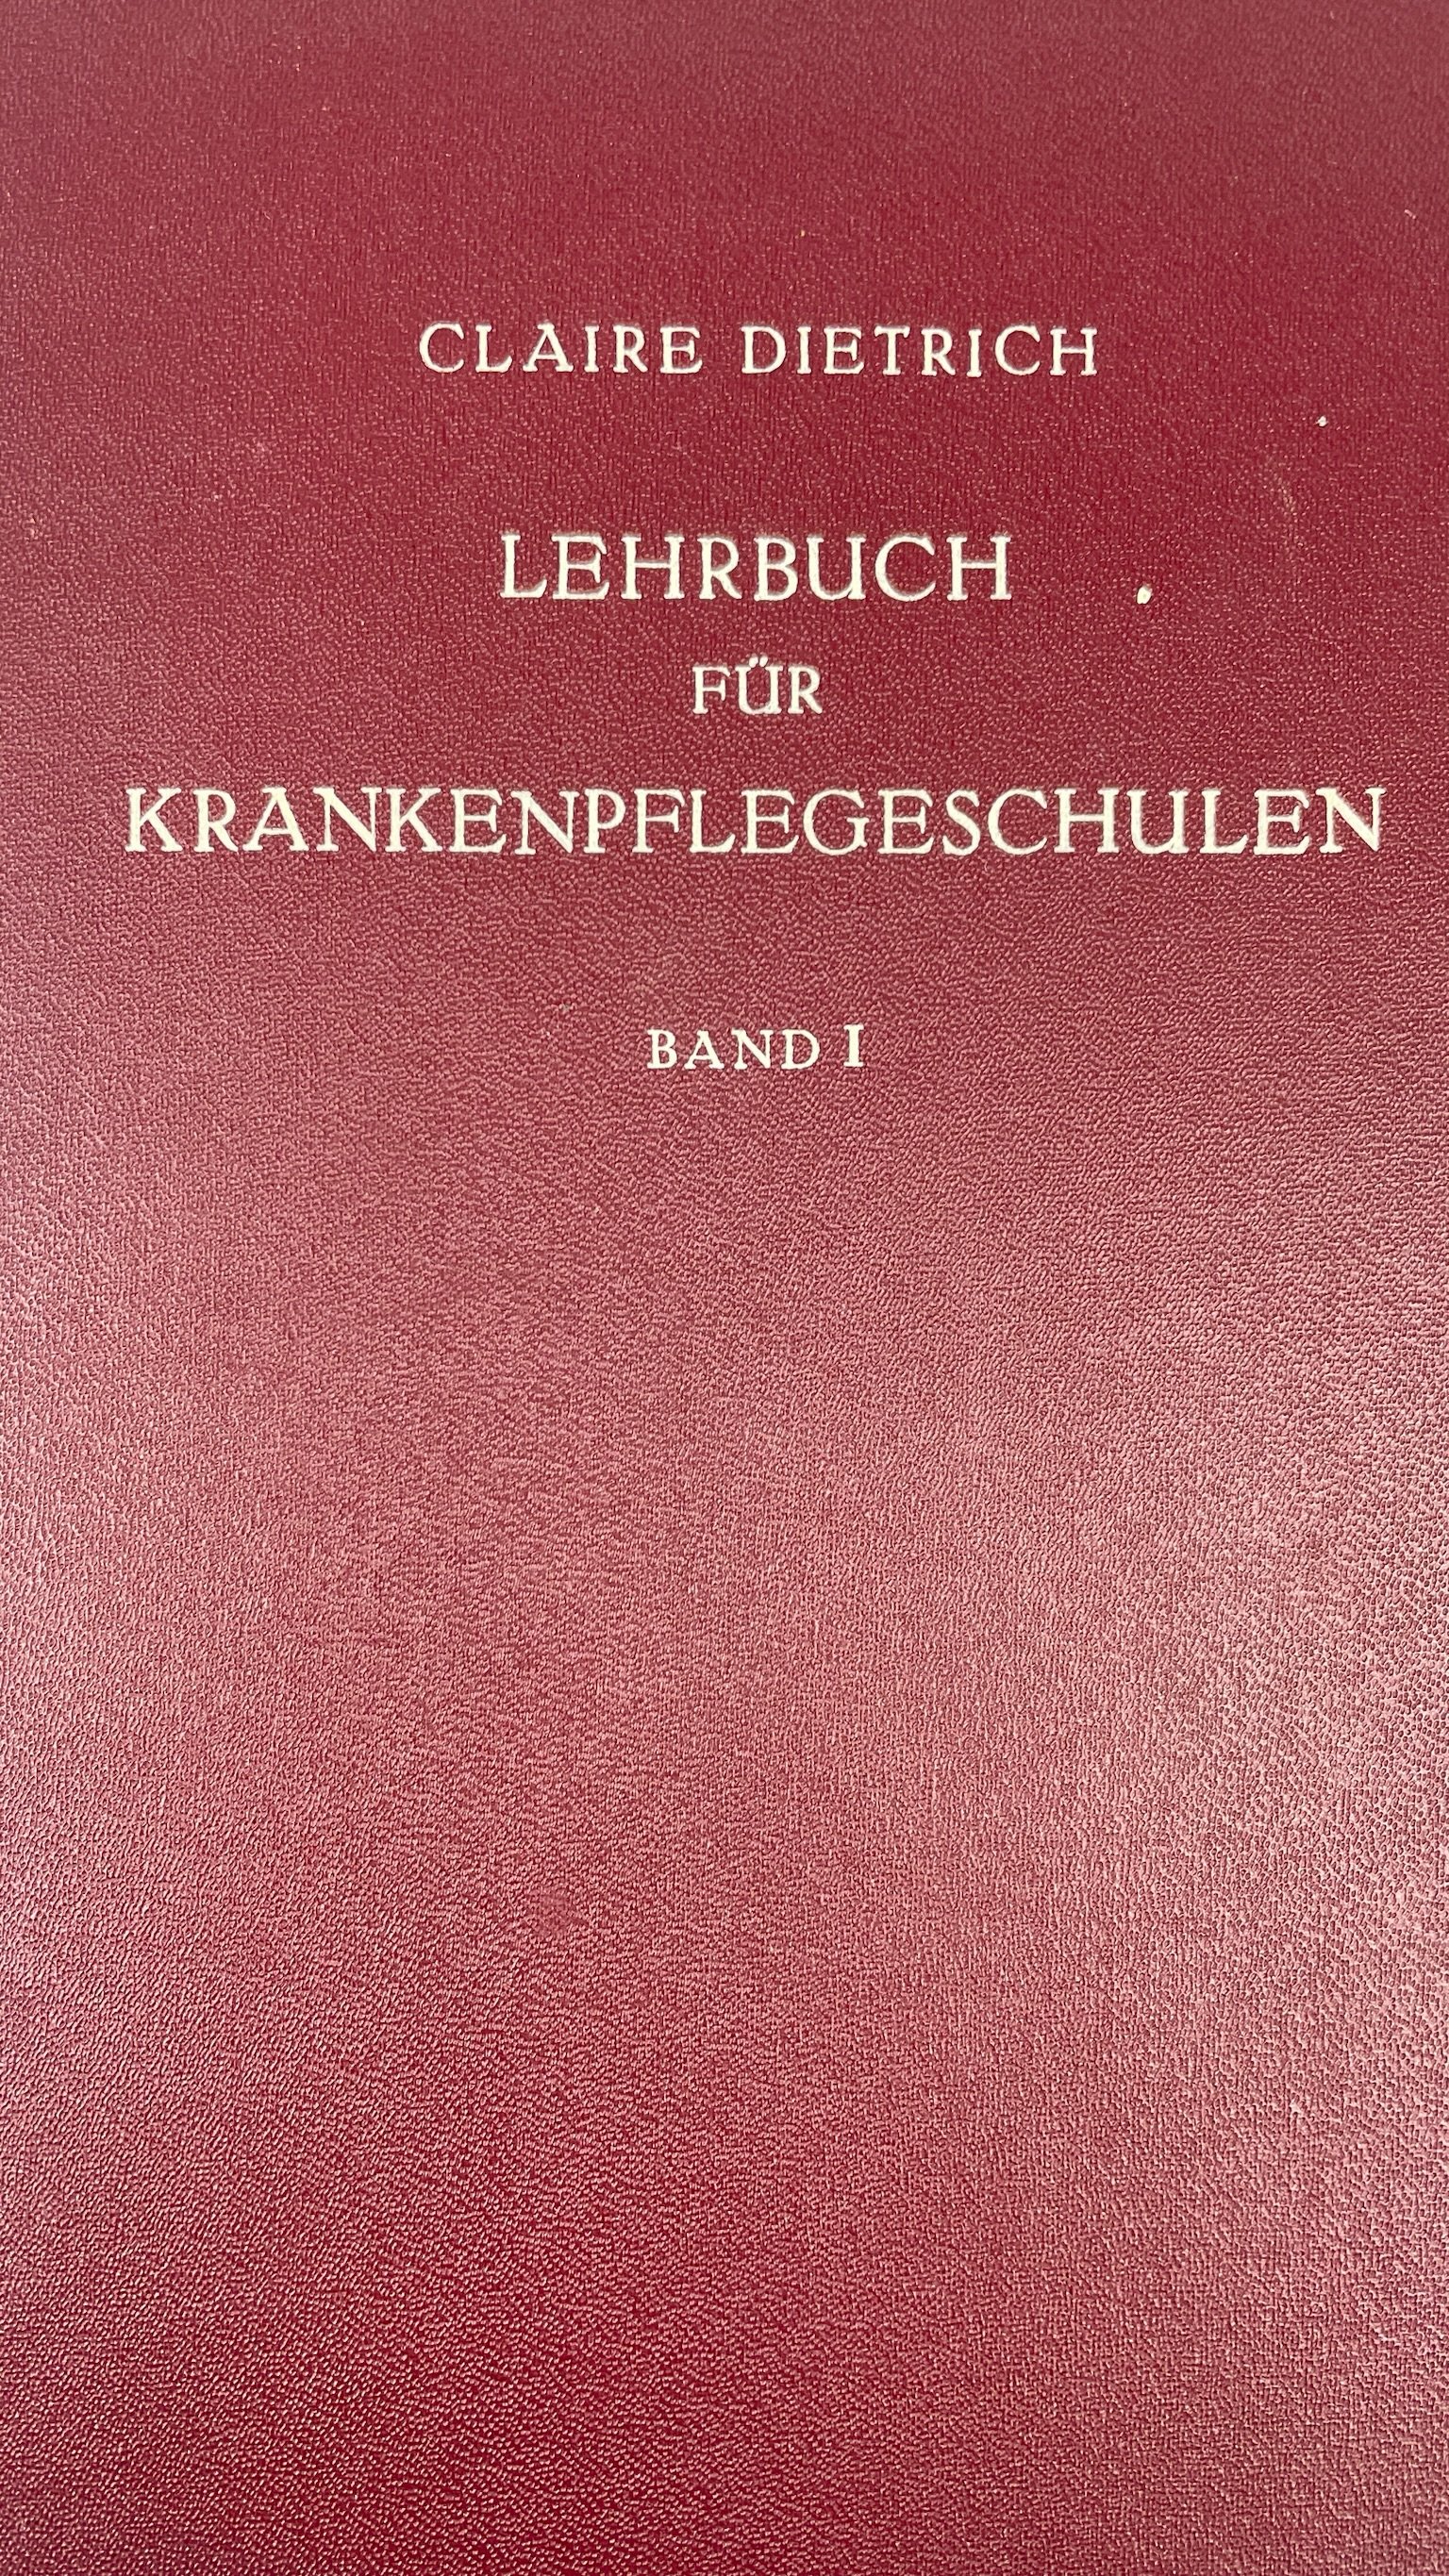 Lehrbuch für Krankenpflegeschulen, Band 1 (Krankenhausmuseum Bielefeld e.V. CC BY-NC-SA)